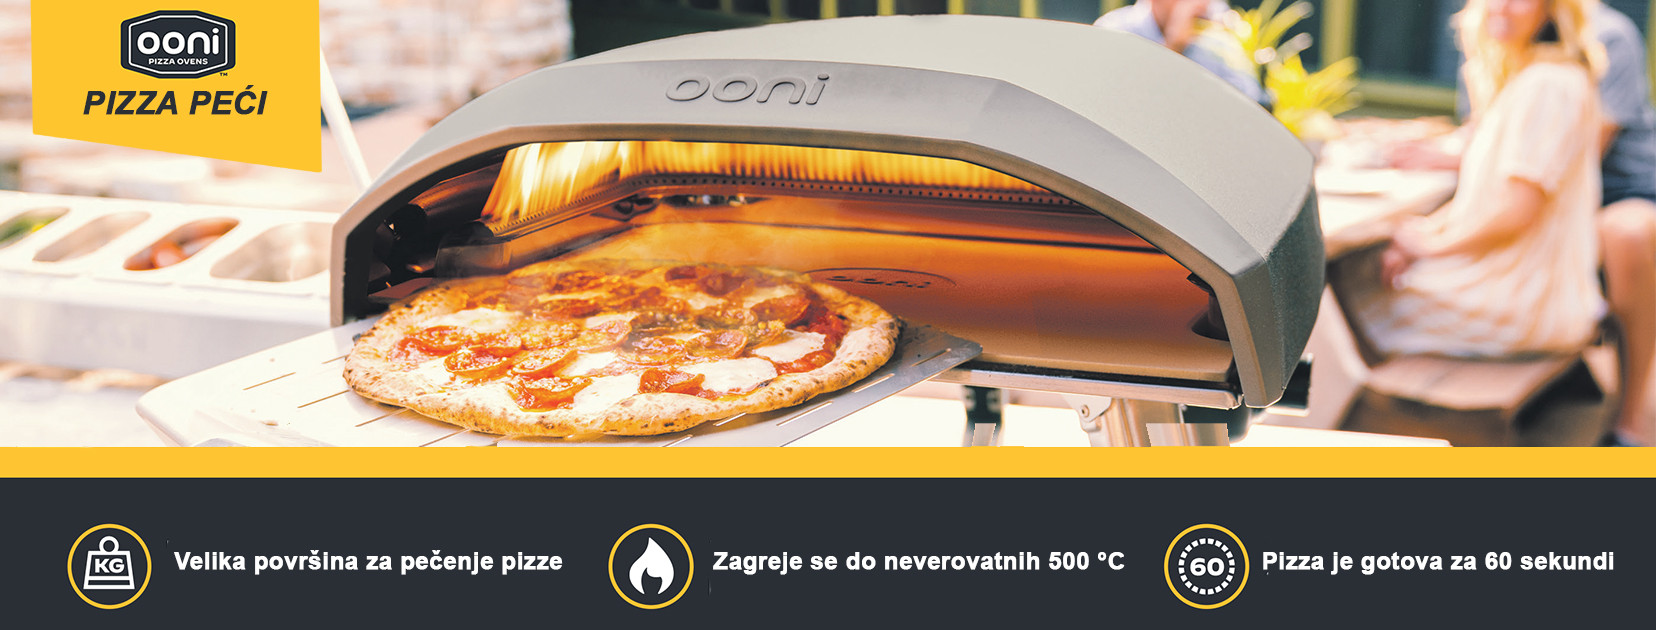 Veliki izbor prenosnih pizza peći Ooni u našoj ponudi. Vruća, brza i dobra pizza za samo 60 sekundi.